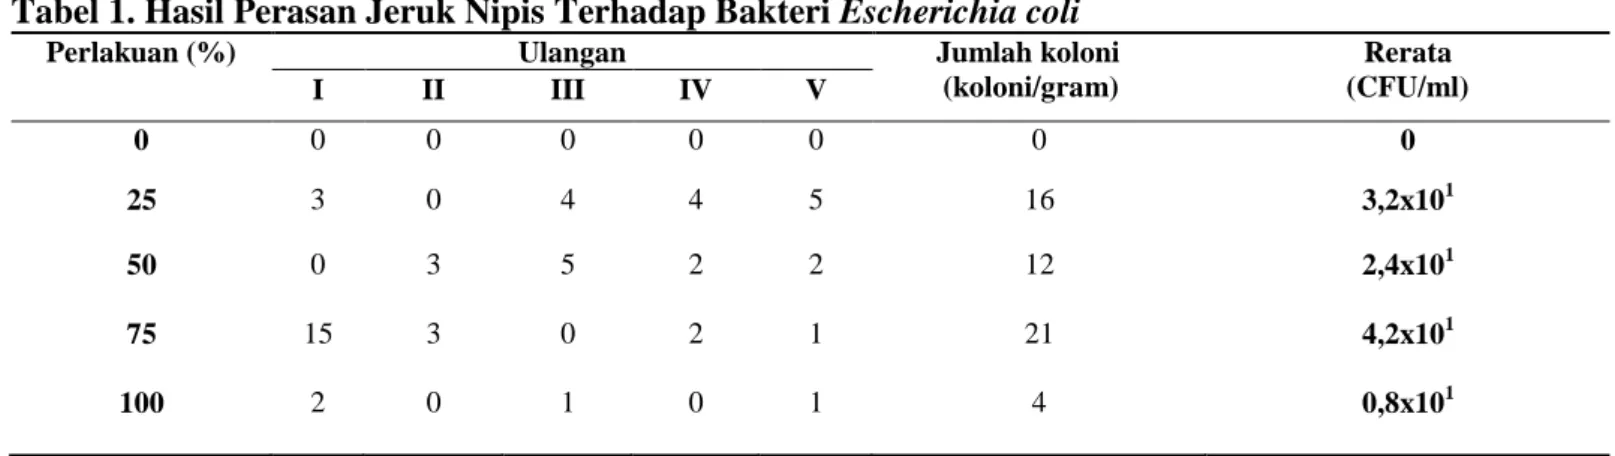 Tabel 1. Hasil Perasan Jeruk Nipis Terhadap Bakteri Escherichia coli   